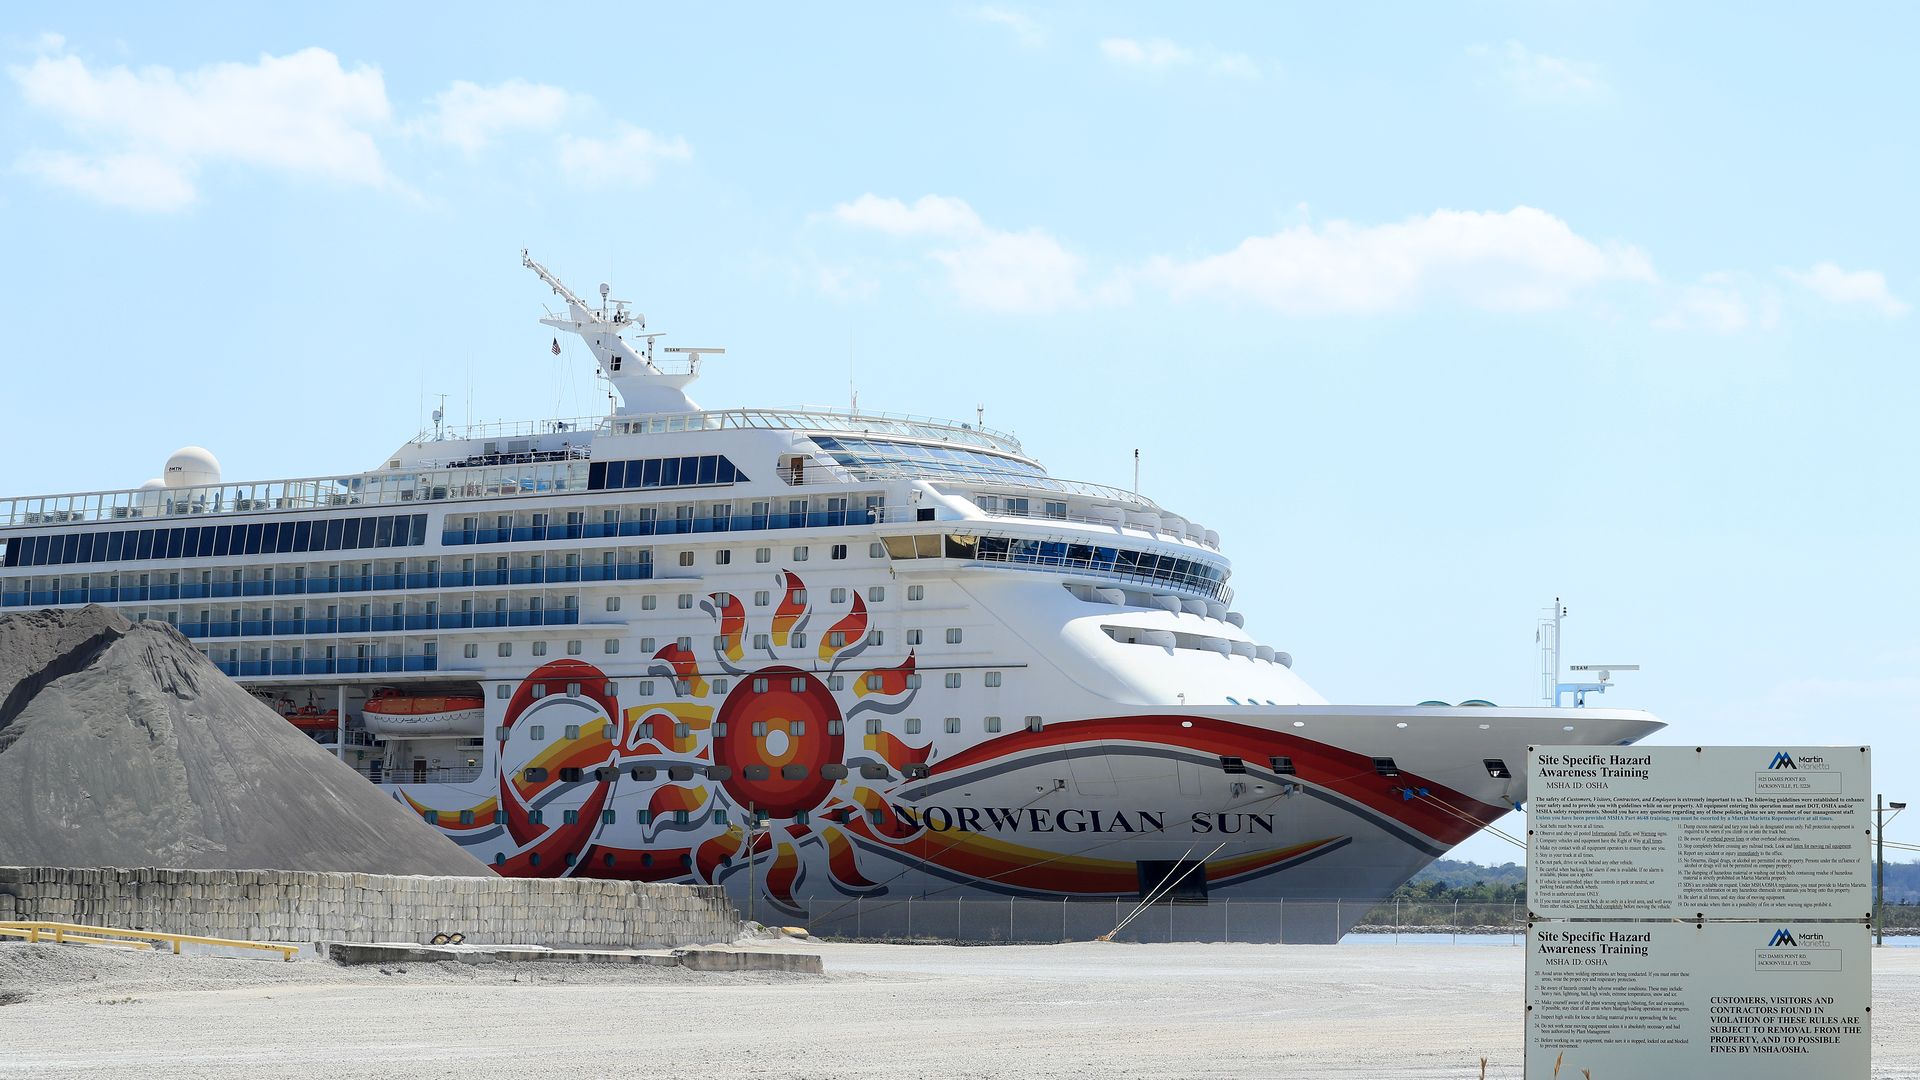  Norwegian Cruise Line's Norwegian Sun cruise ship is docked at the Port of Jacksonville amid the Coronavirus outbreak on March 27, 2020 in Jacksonville, Florida.